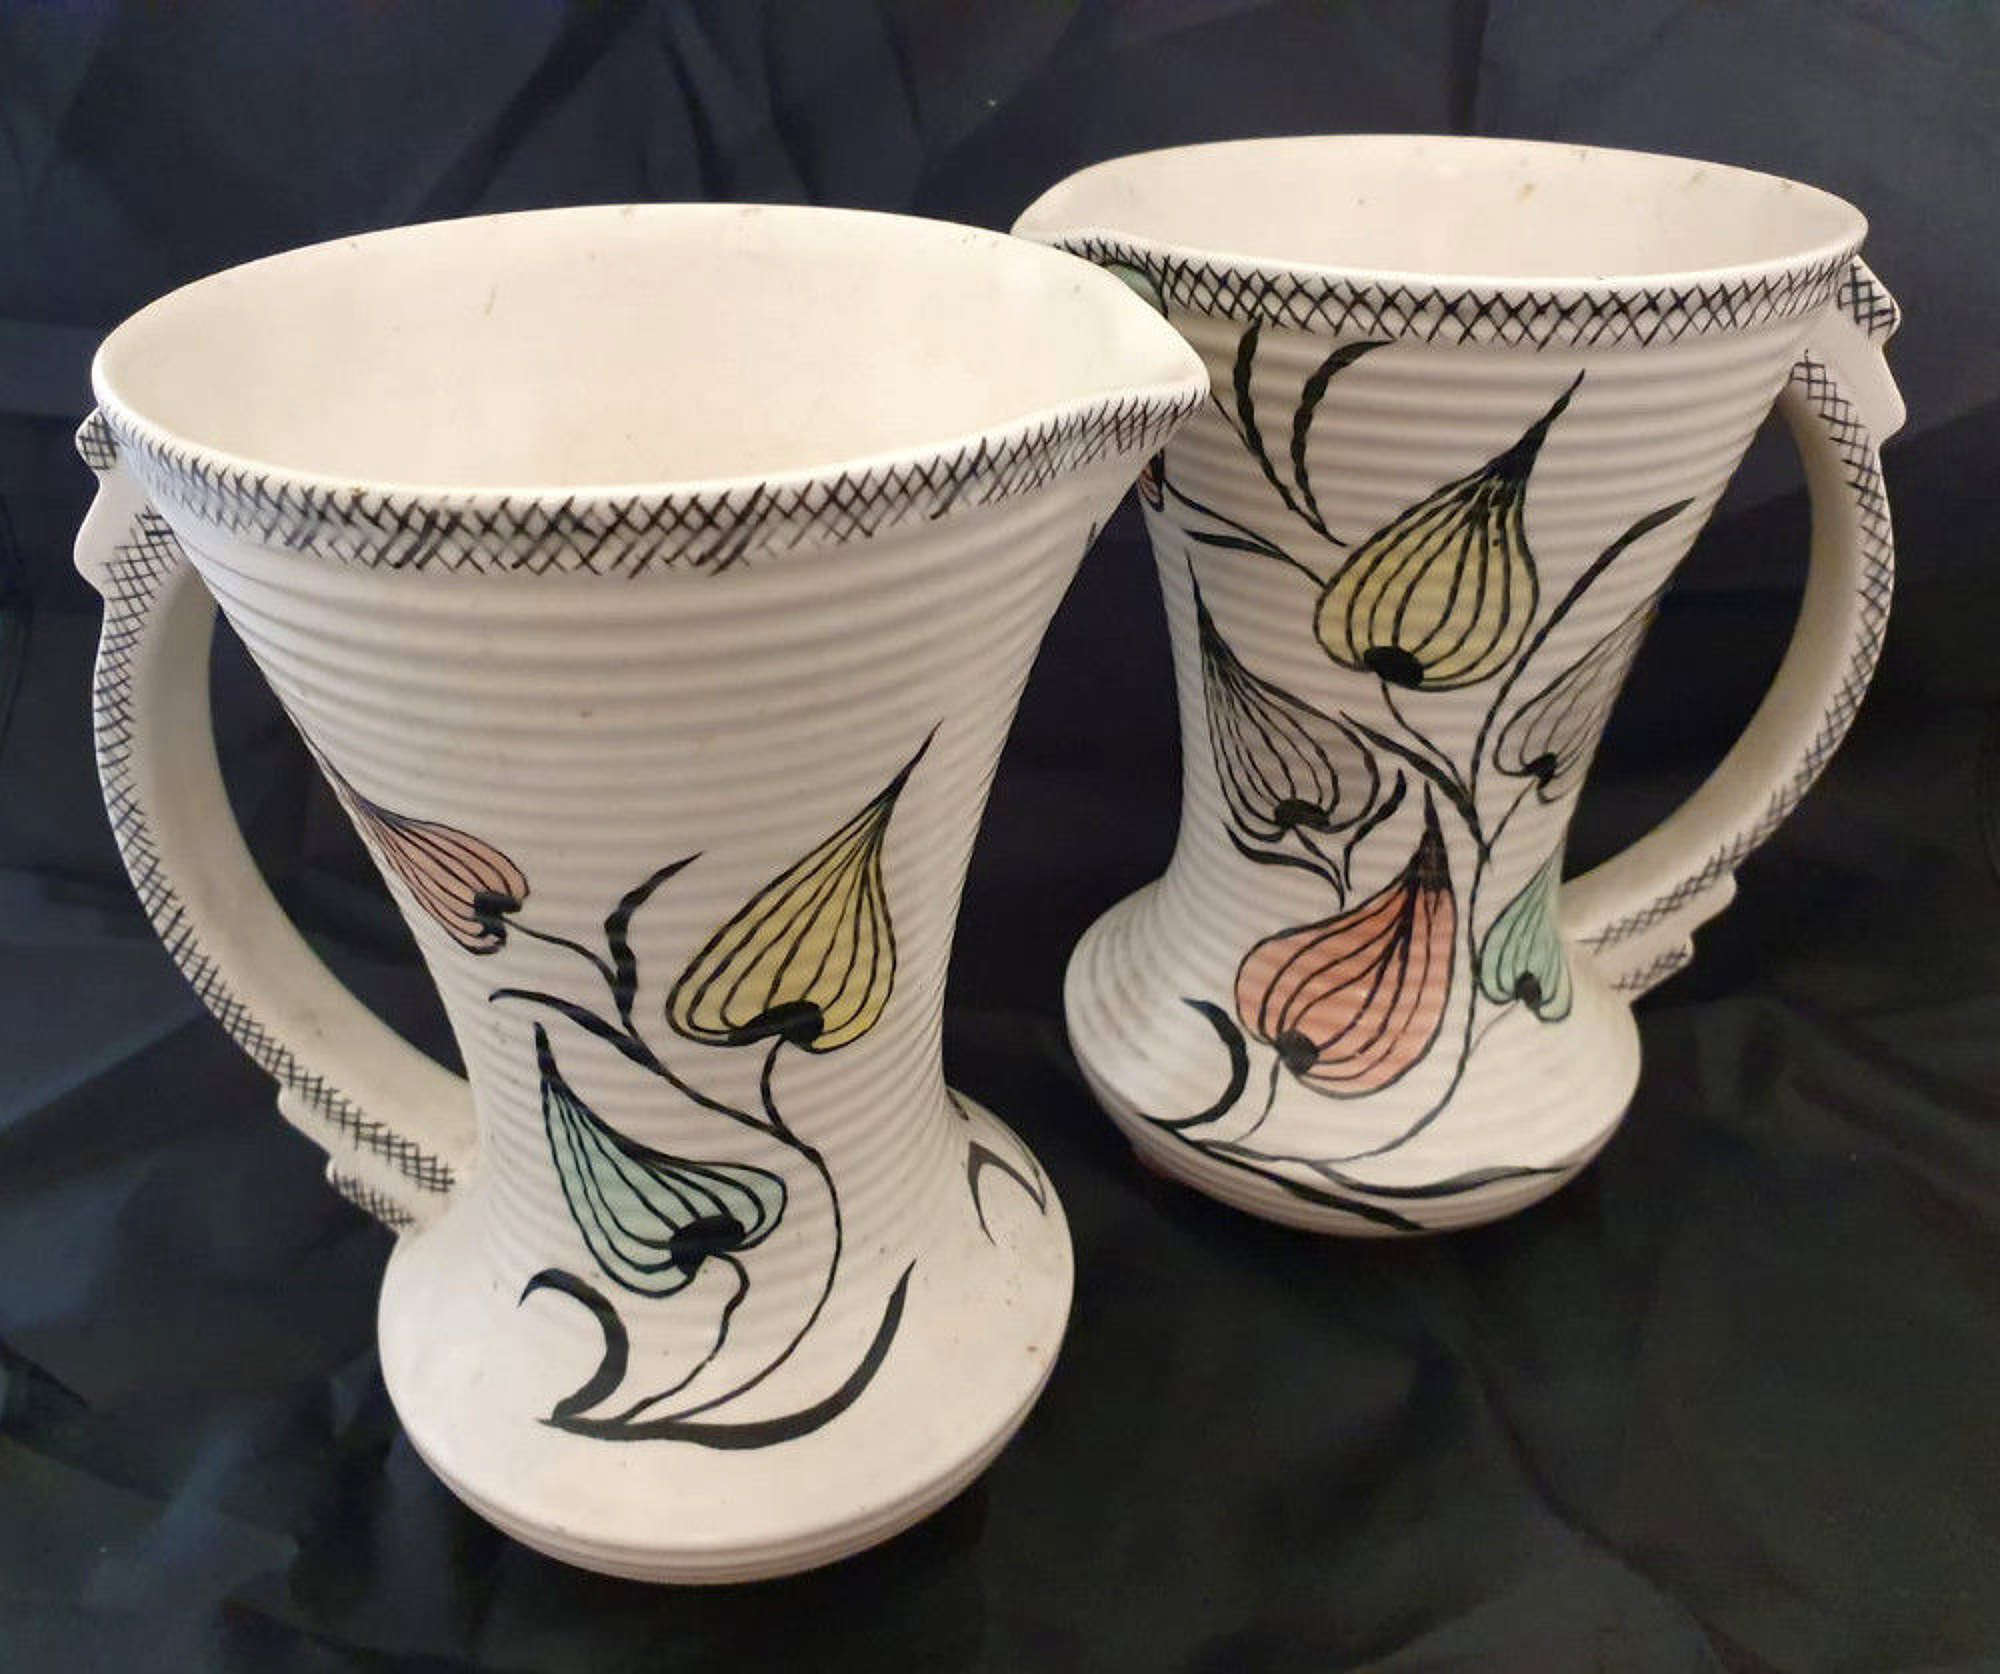 Lovely Pair Of 1950s Vulcan Ware Porcelain Jugs Or Vases